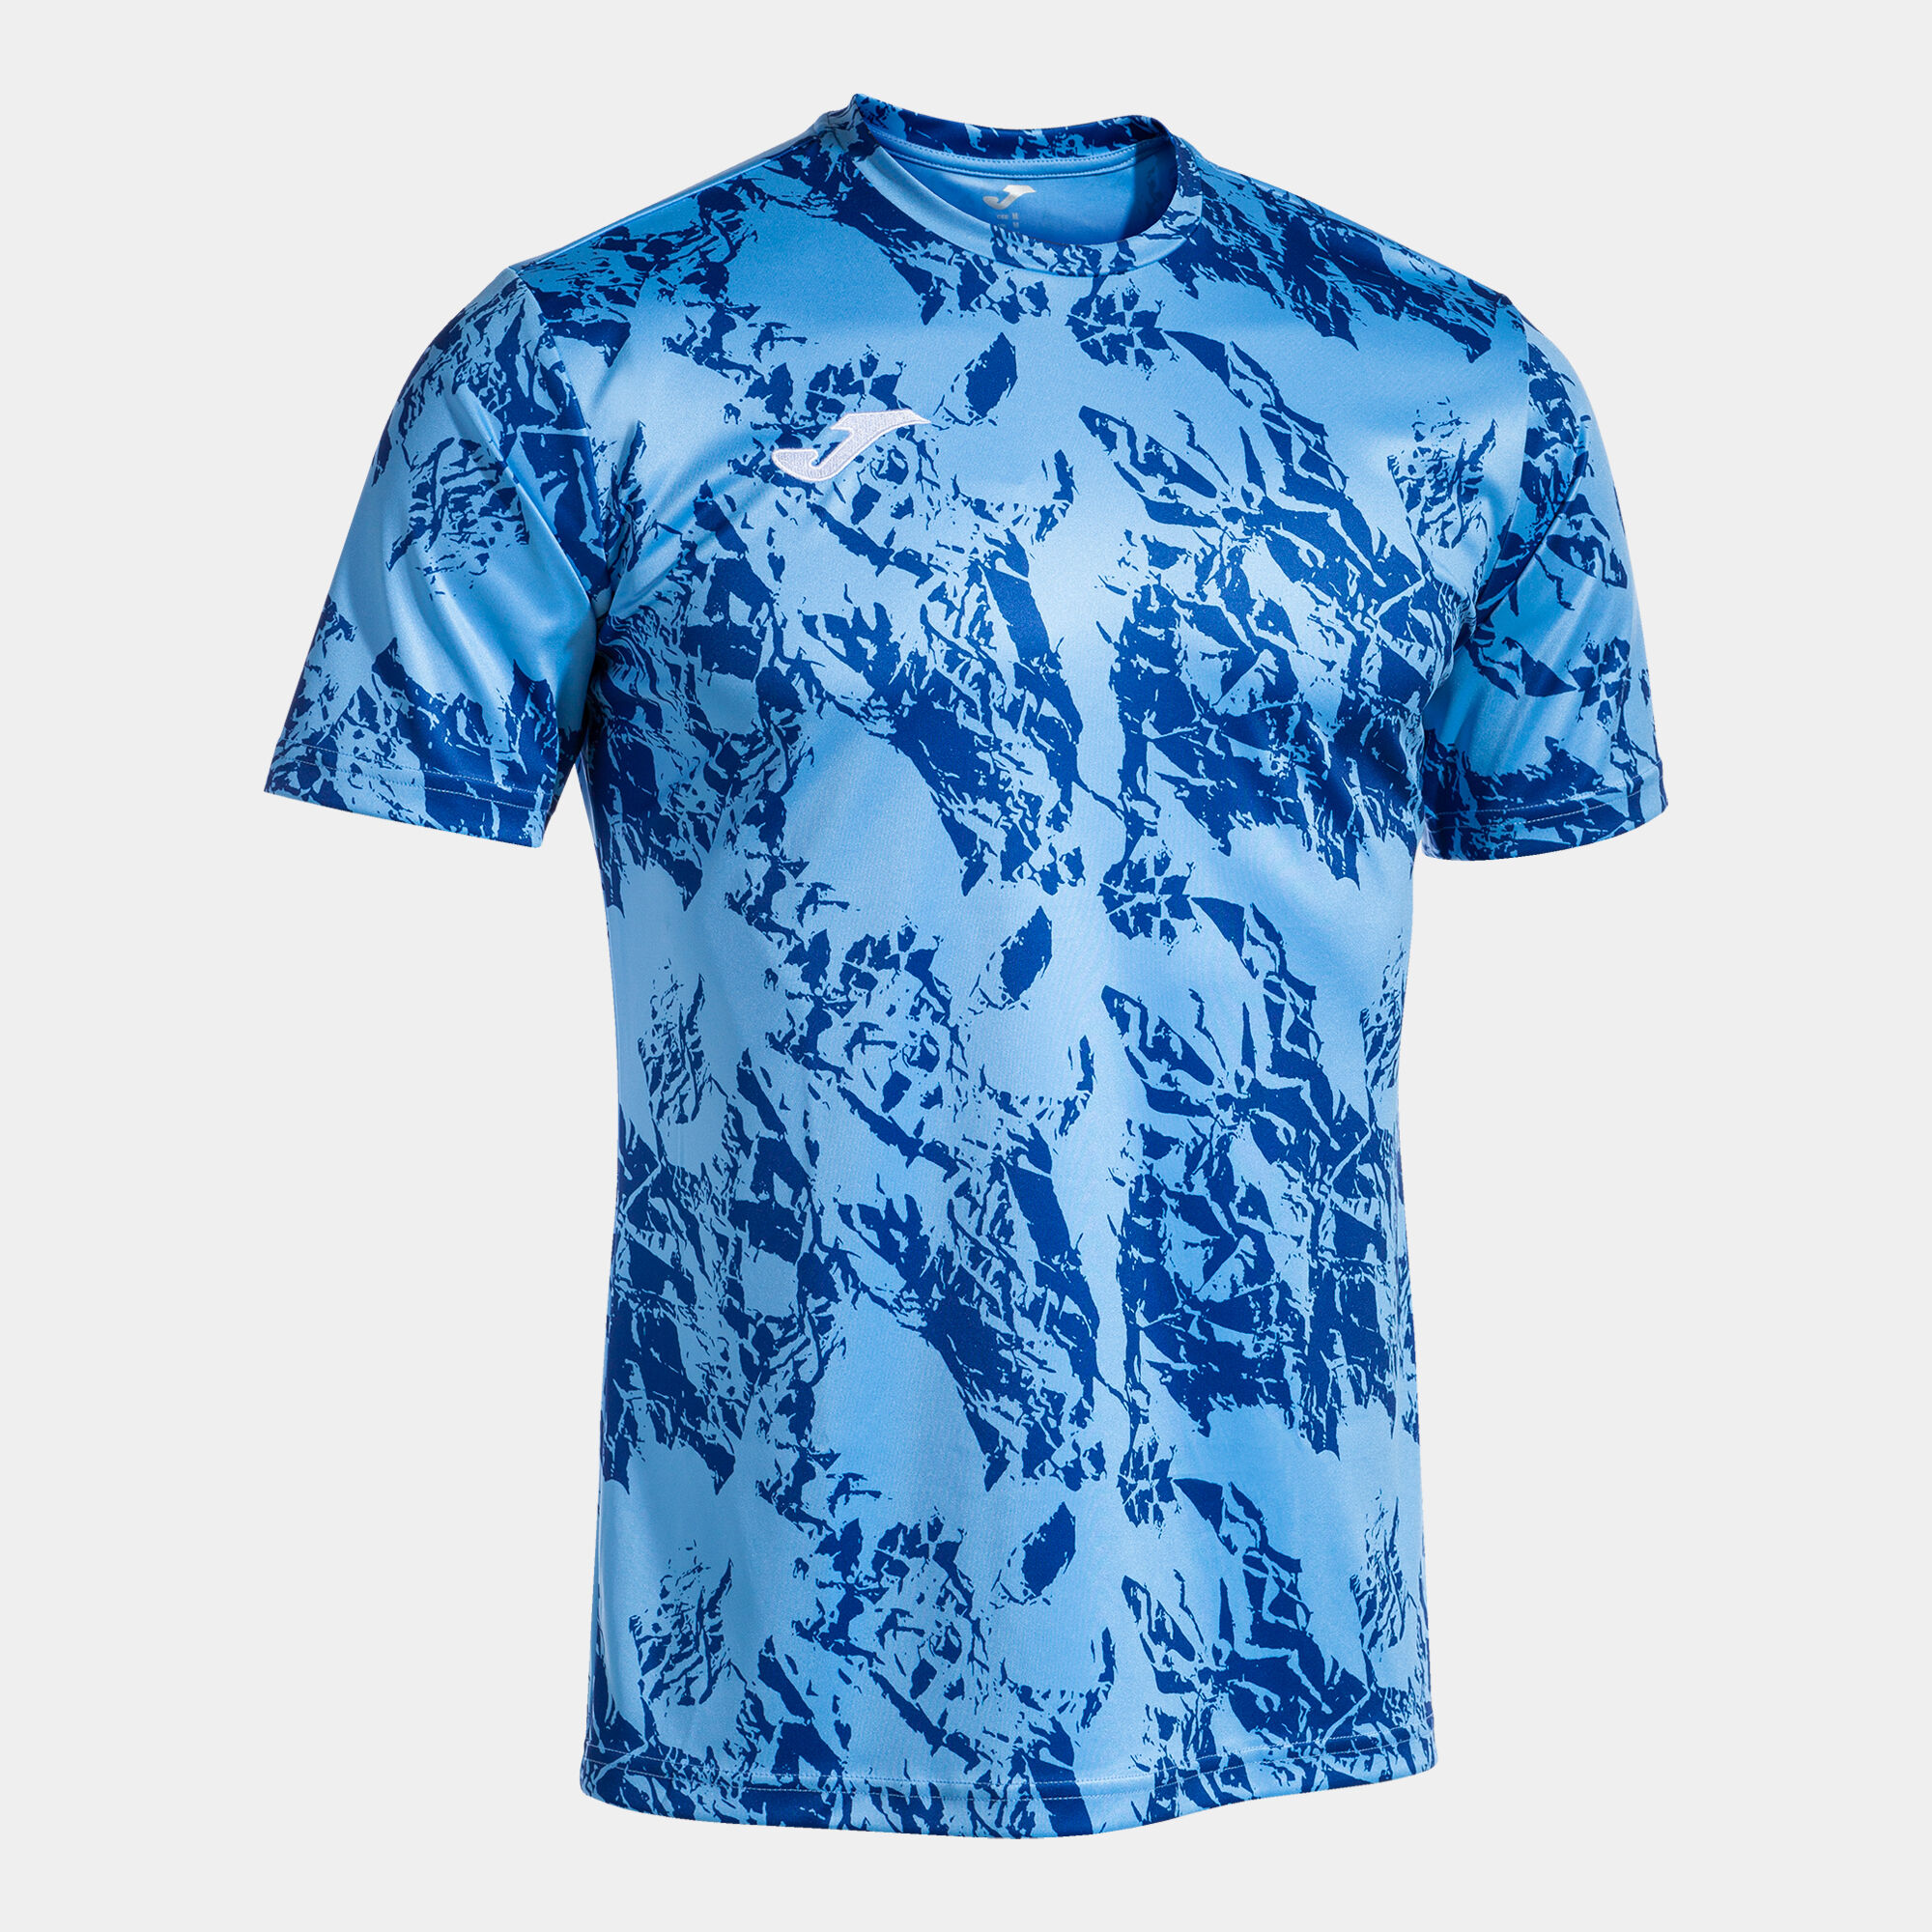 Camiseta manga corta hombre Lion celeste azul